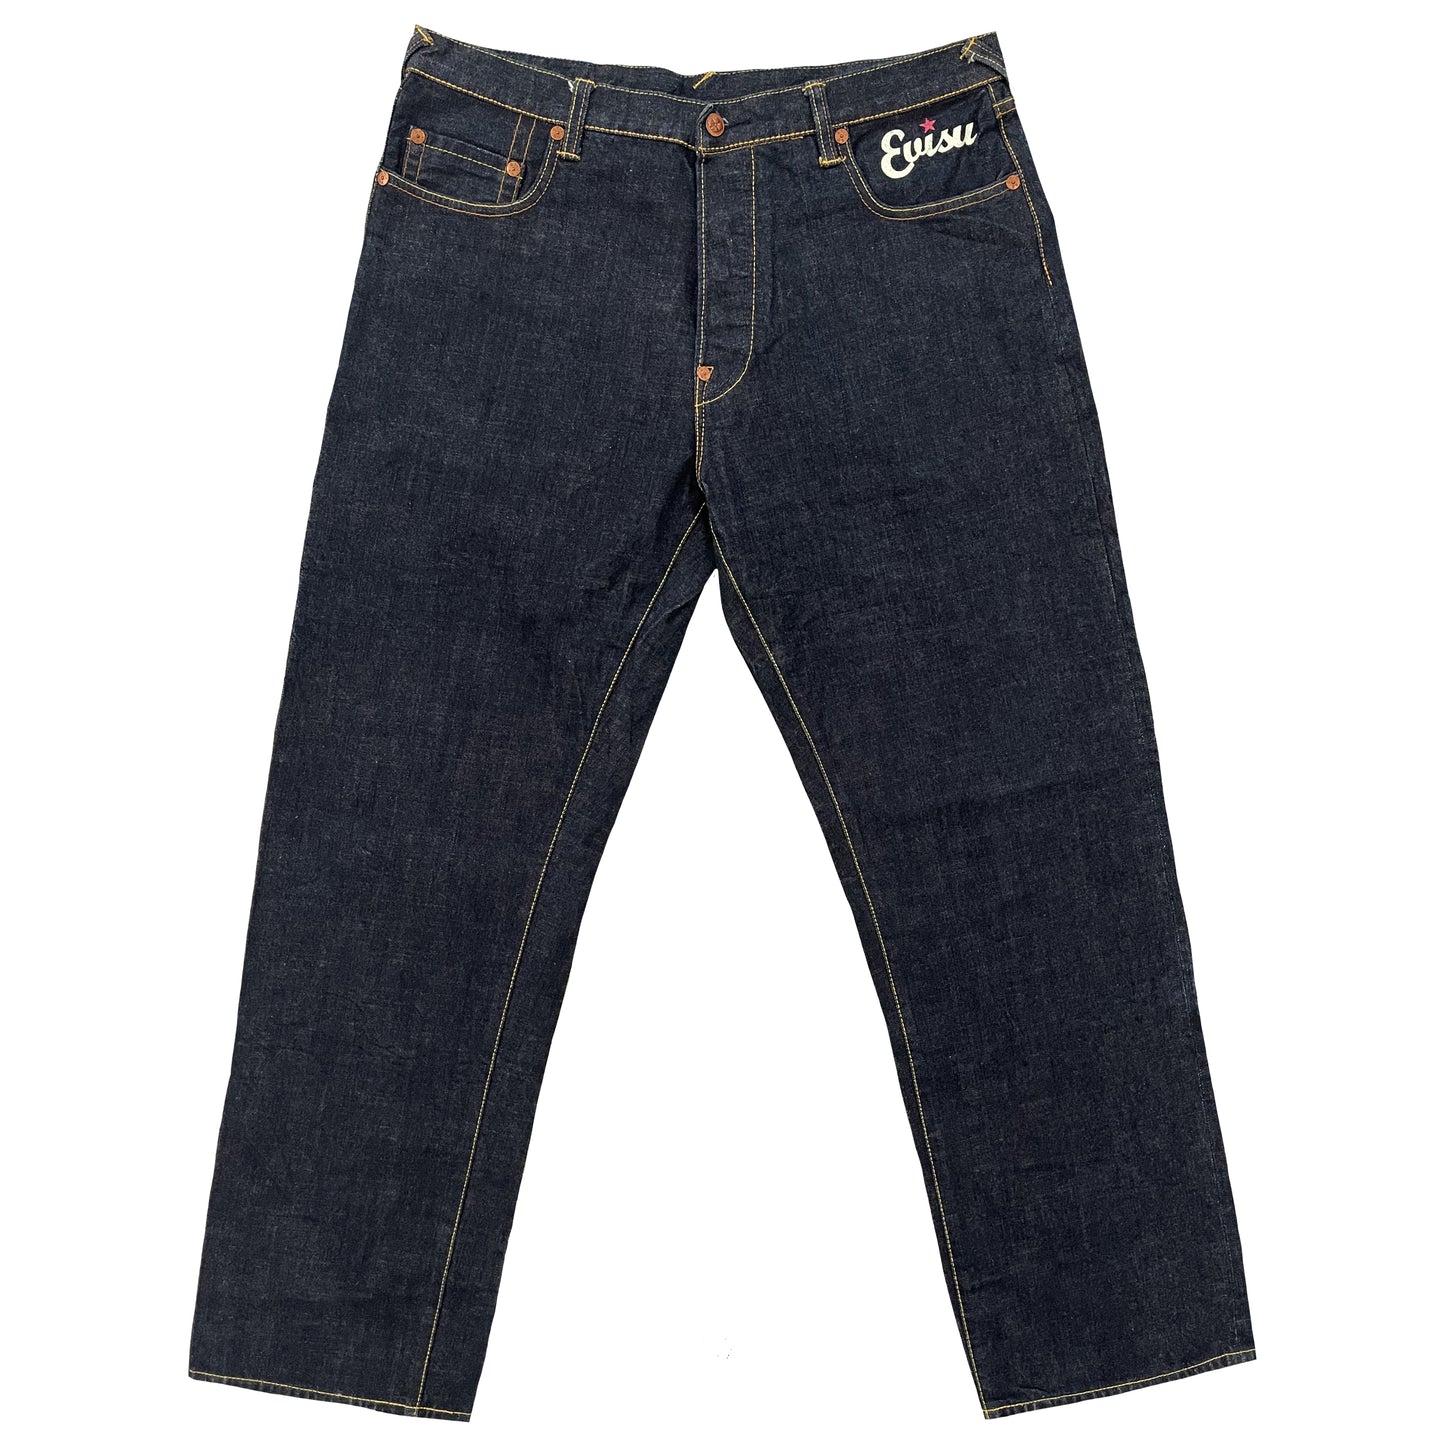 Evisu 20th Anniversary Jeans